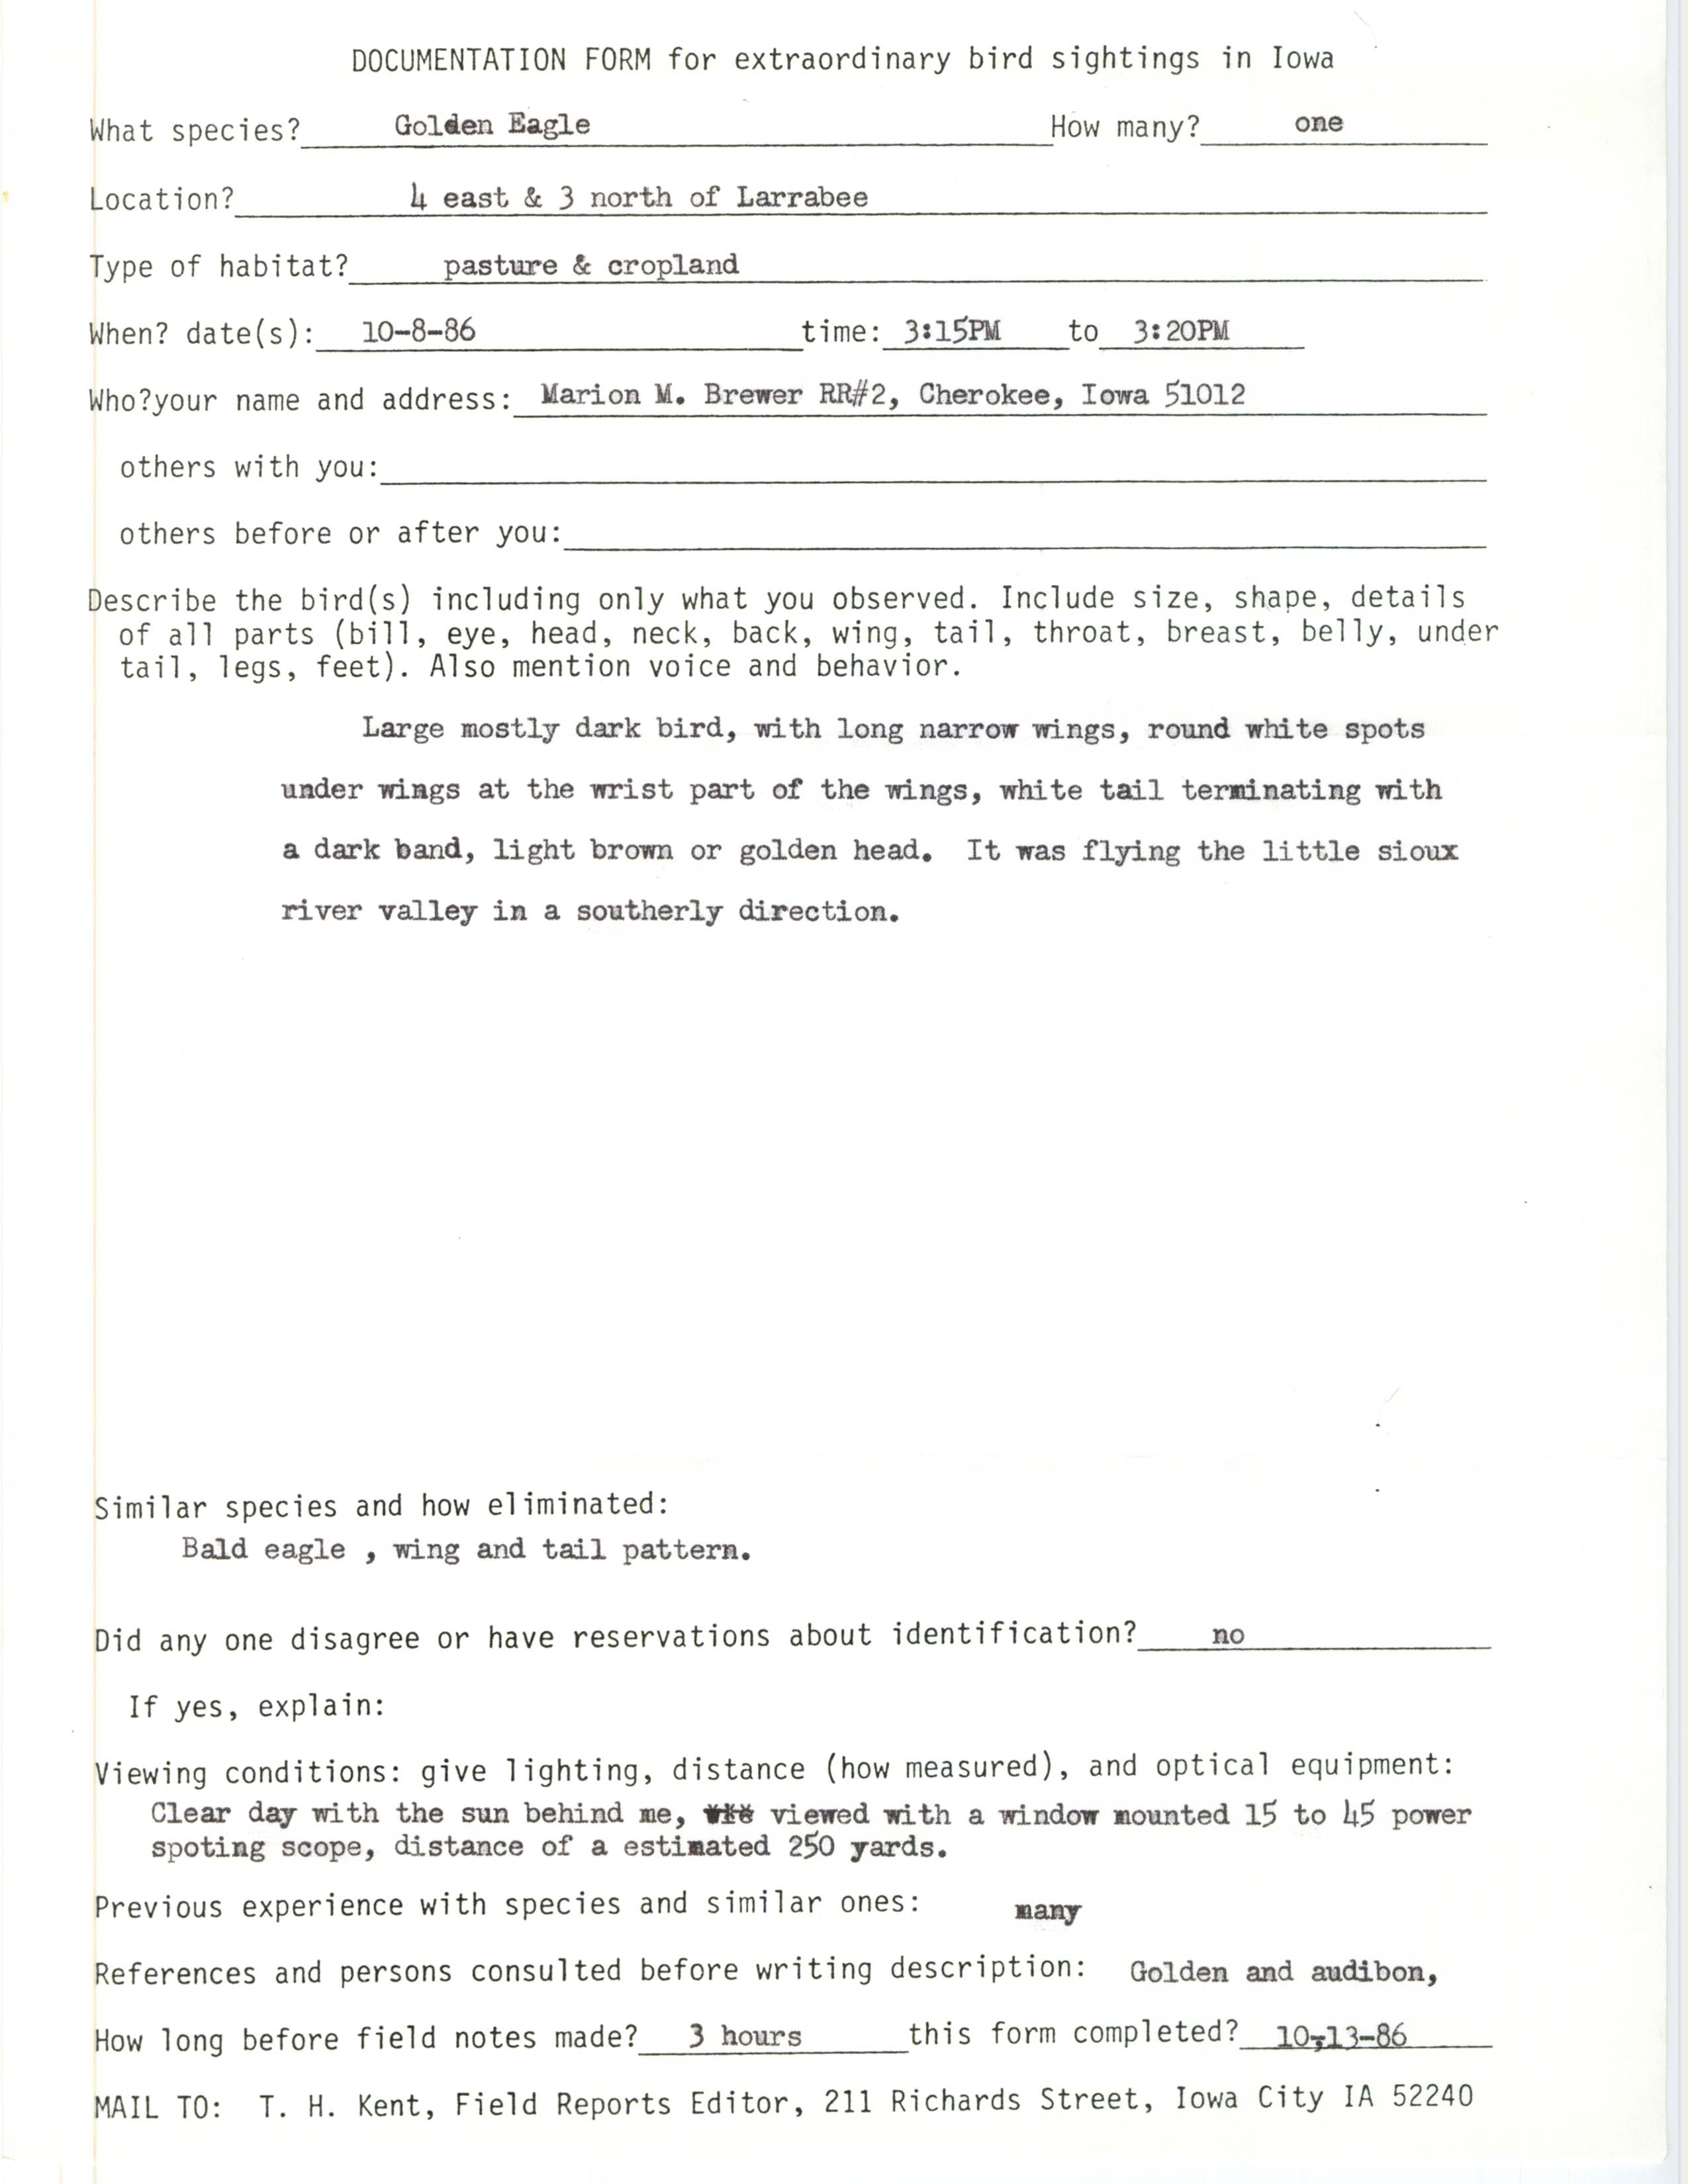 Rare bird documentation form for Golden Eagle near Larrabee, 1986